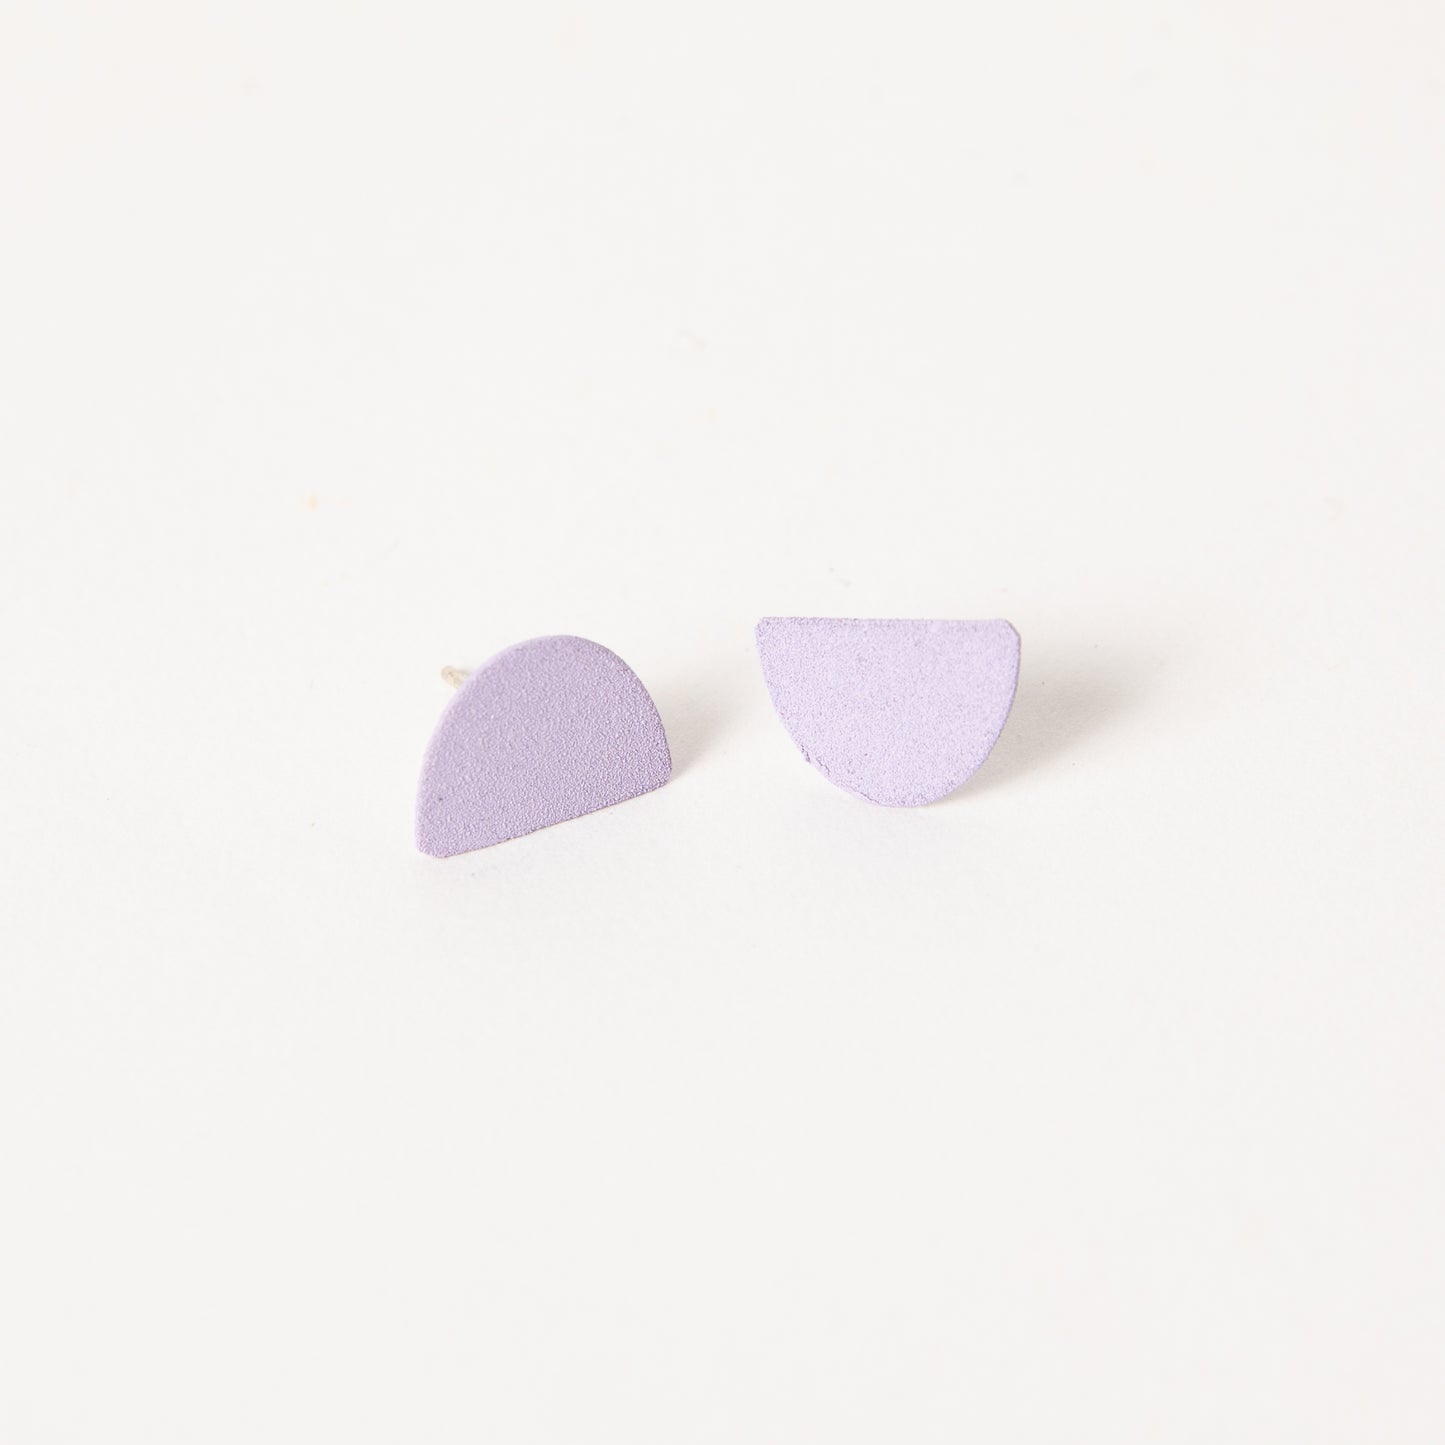 Mound earrings in lilac.